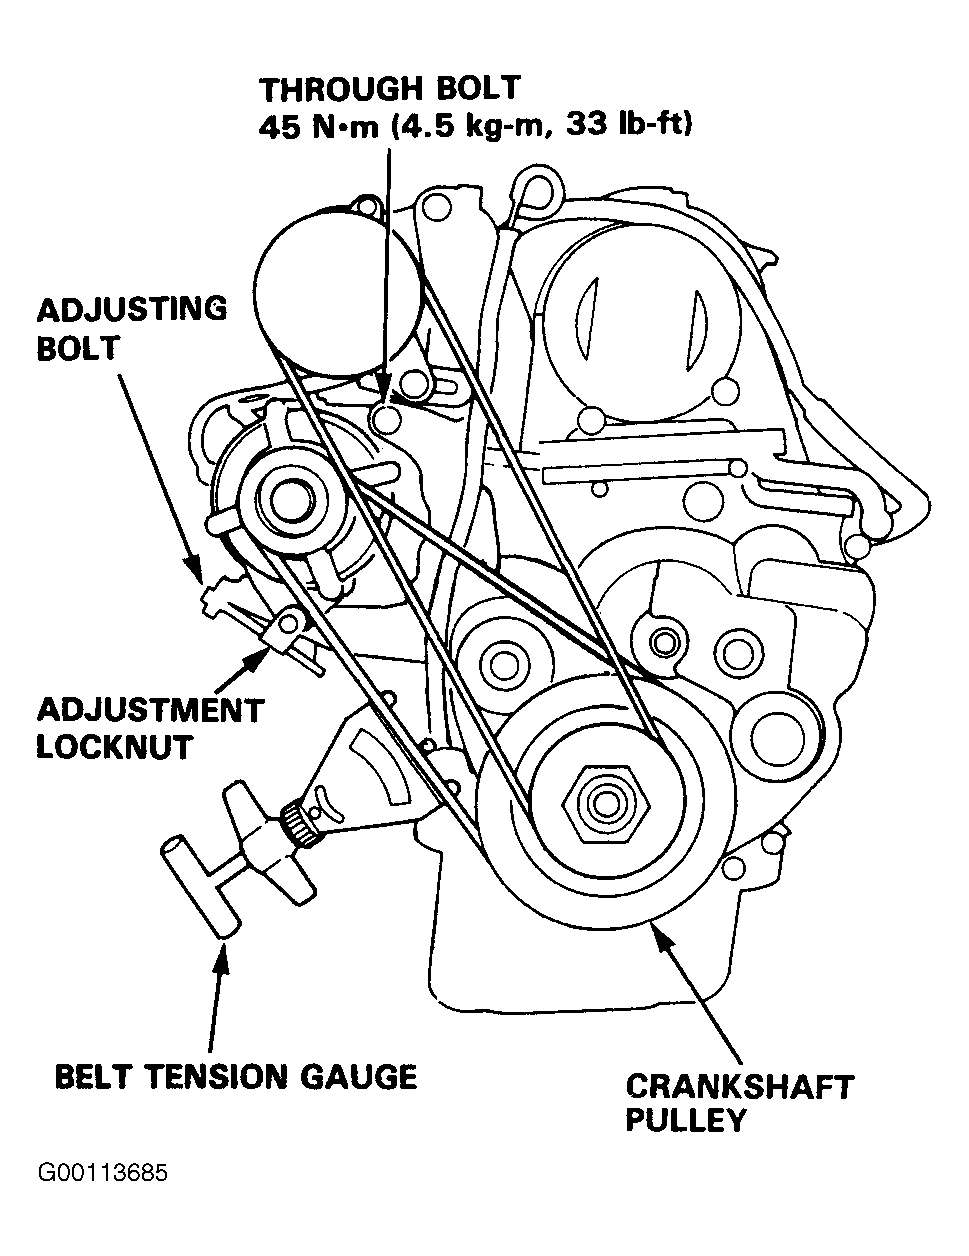 1990 Honda Accord Serpentine Belt Routing And Timing Belt Diagrams